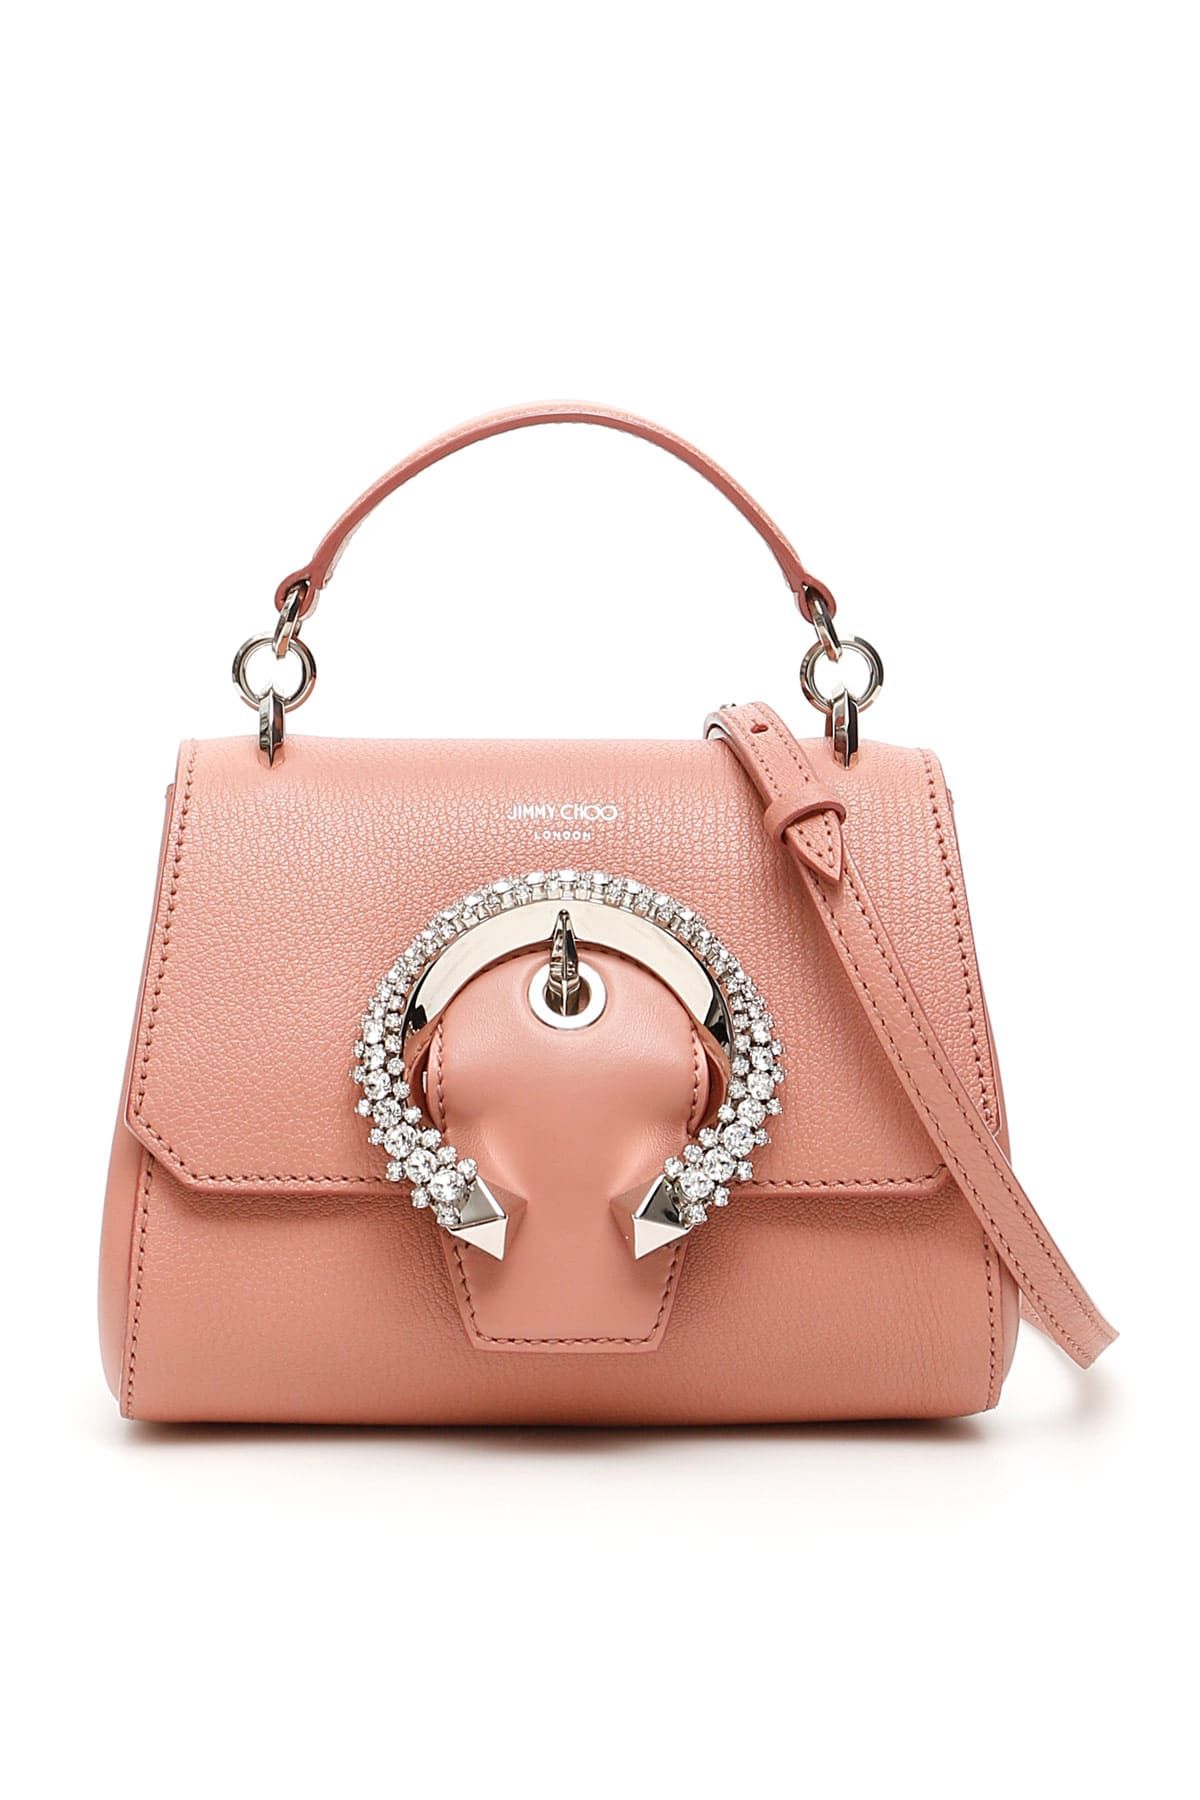 Jimmy Choo Bags: Luxury Handbags for the Modern Woman